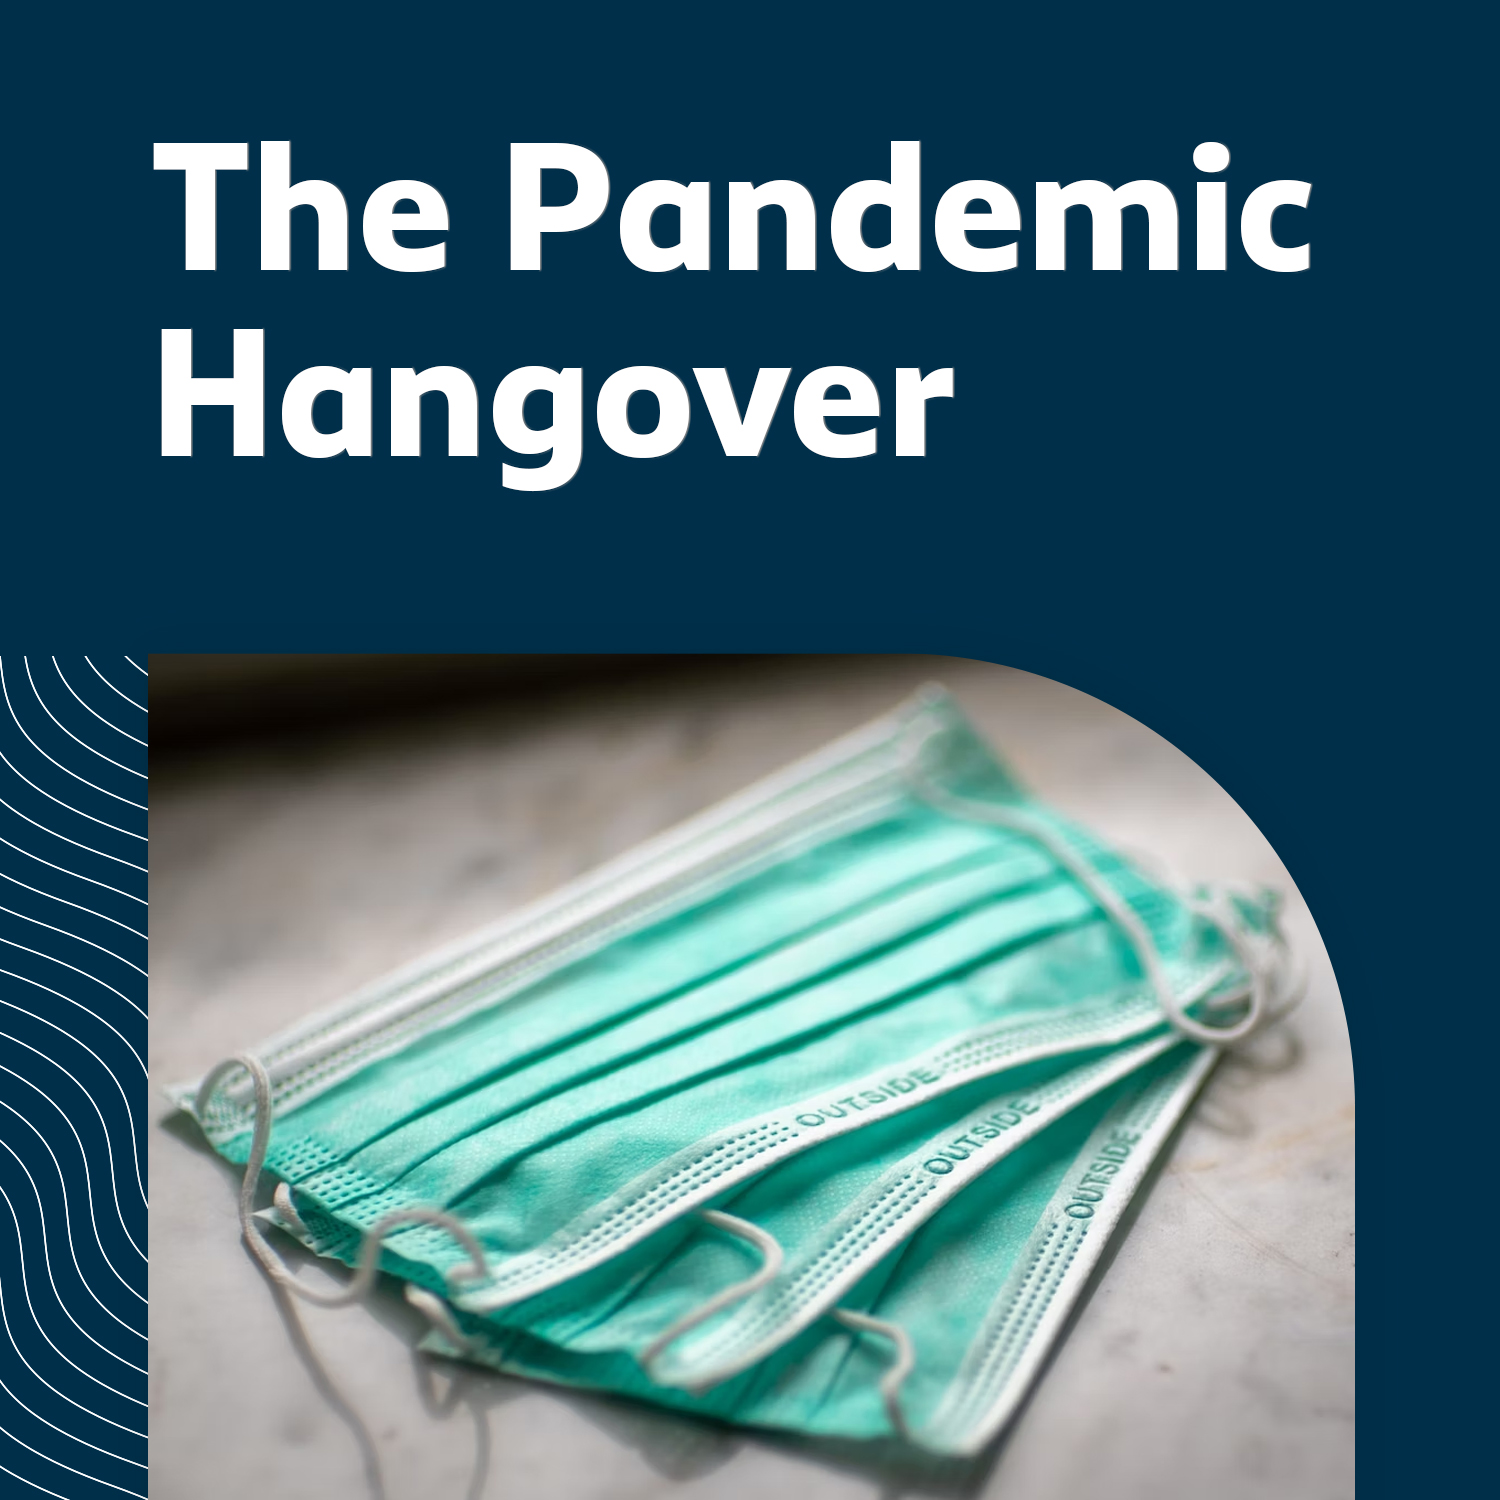 The Pandemic Hangover